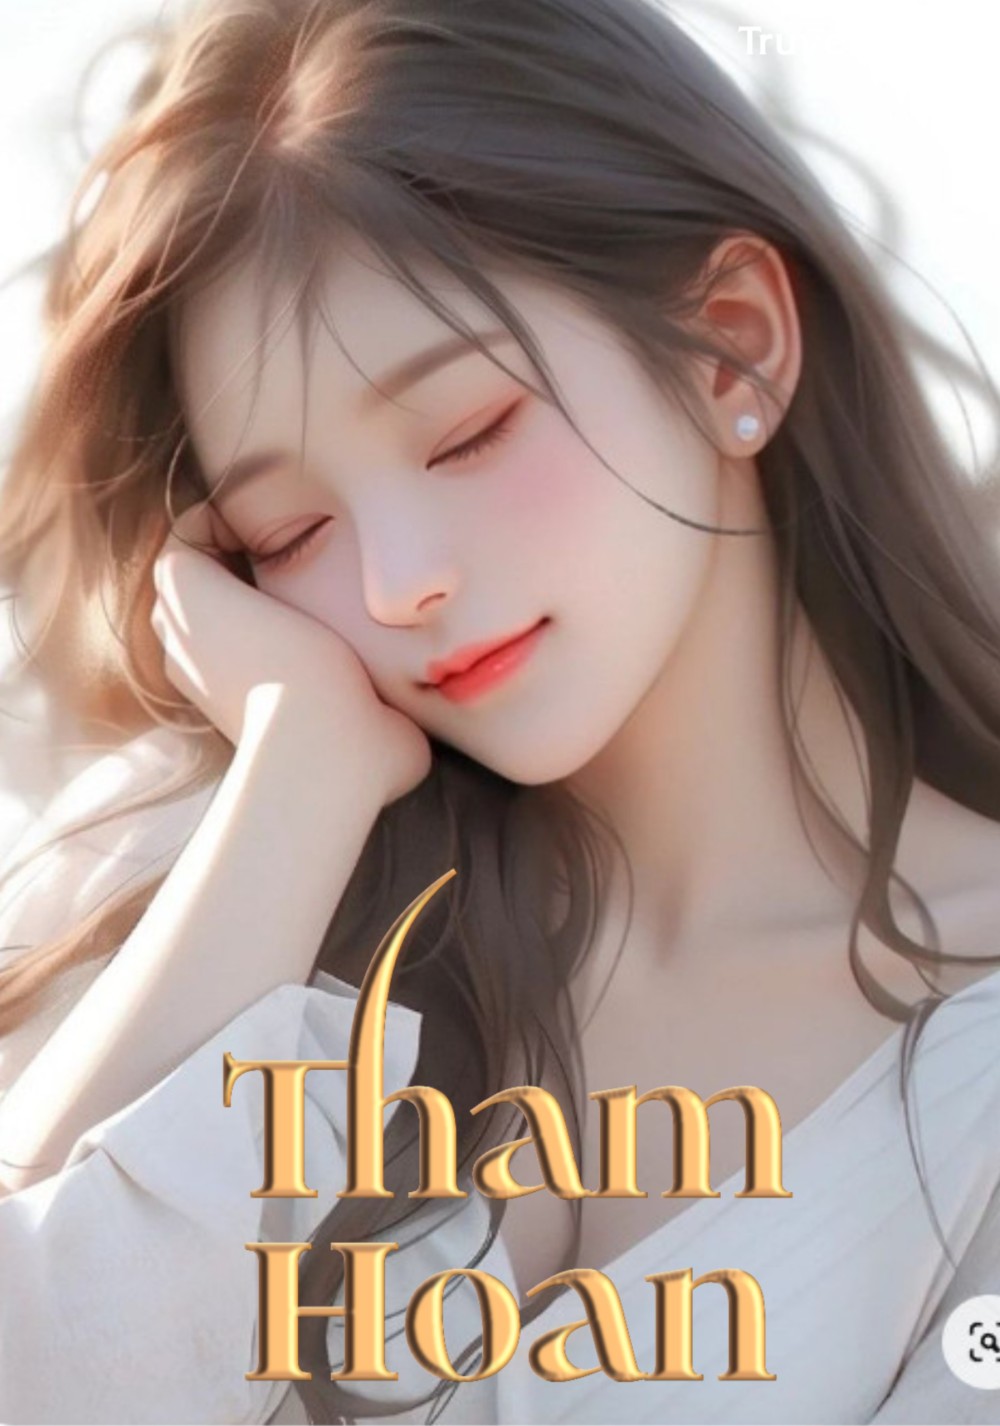 Tham Hoan